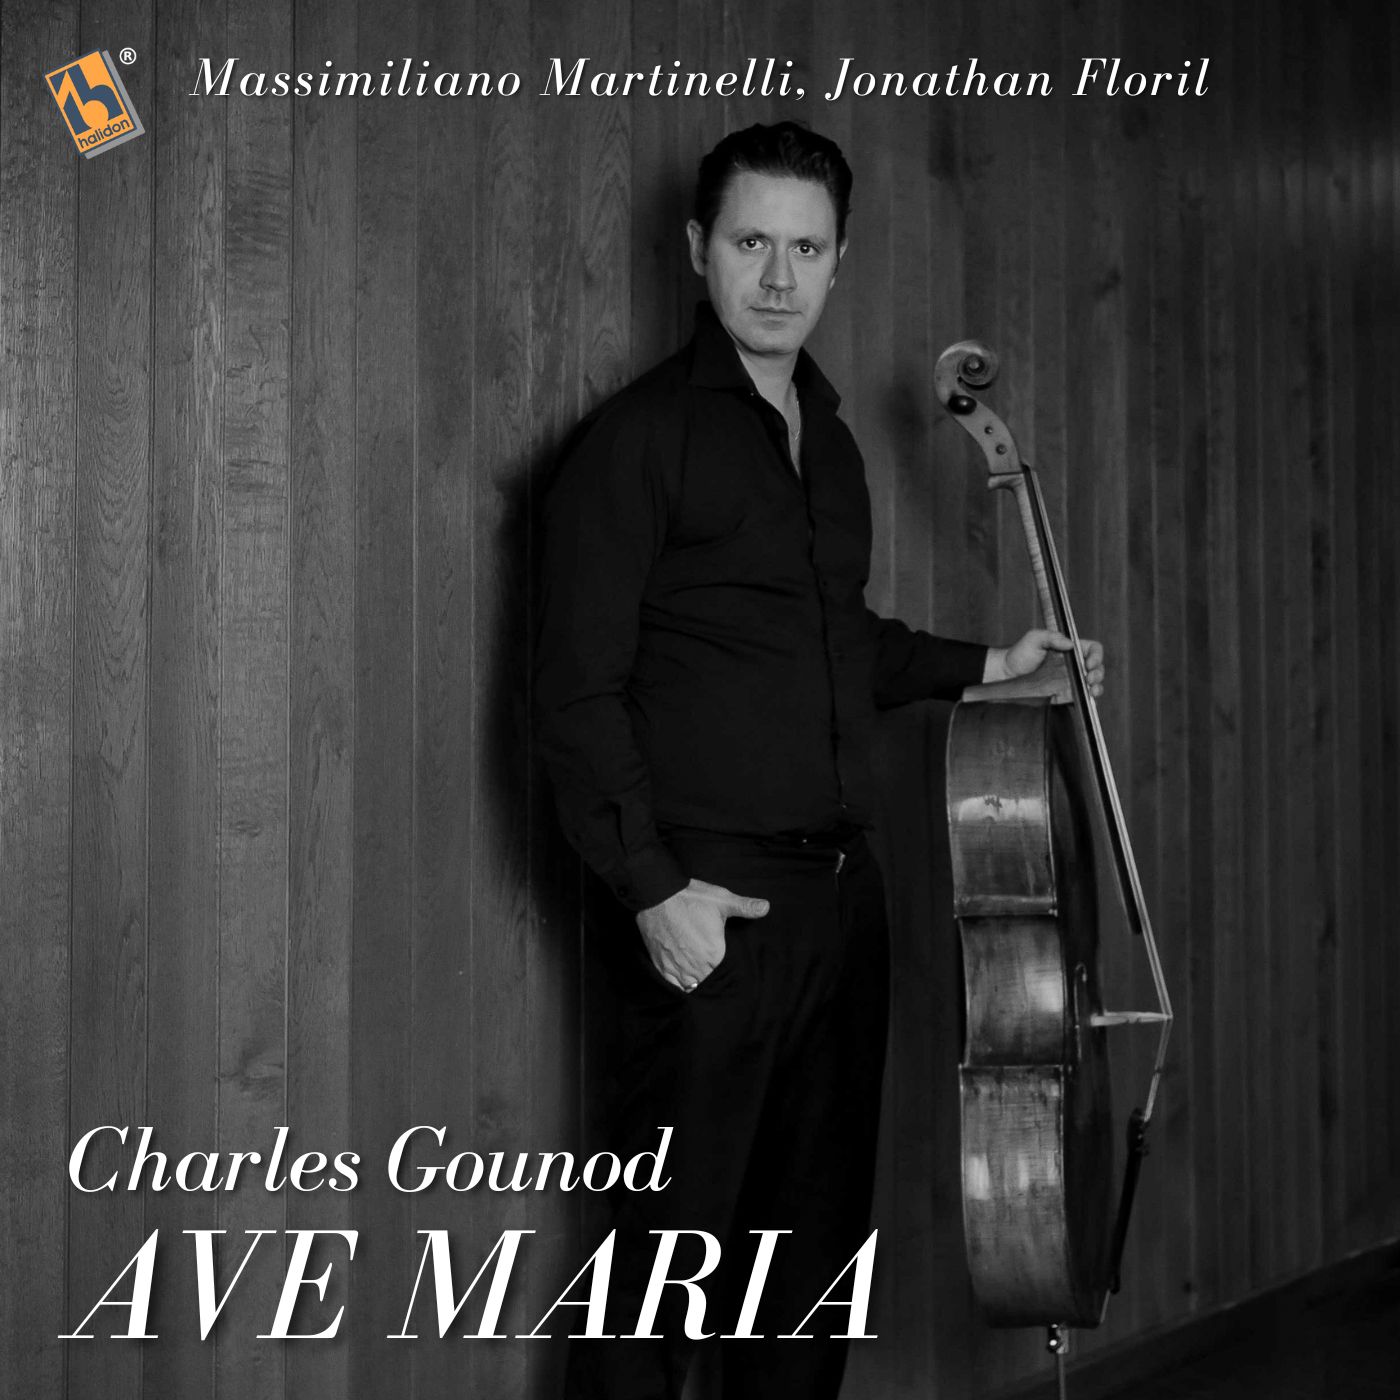 Gounod: Ave Maria (Méditation sur le Premier Prélude de Piano de S. Bach - Arr. for Cello and Piano by Orfeo Mandozzi)